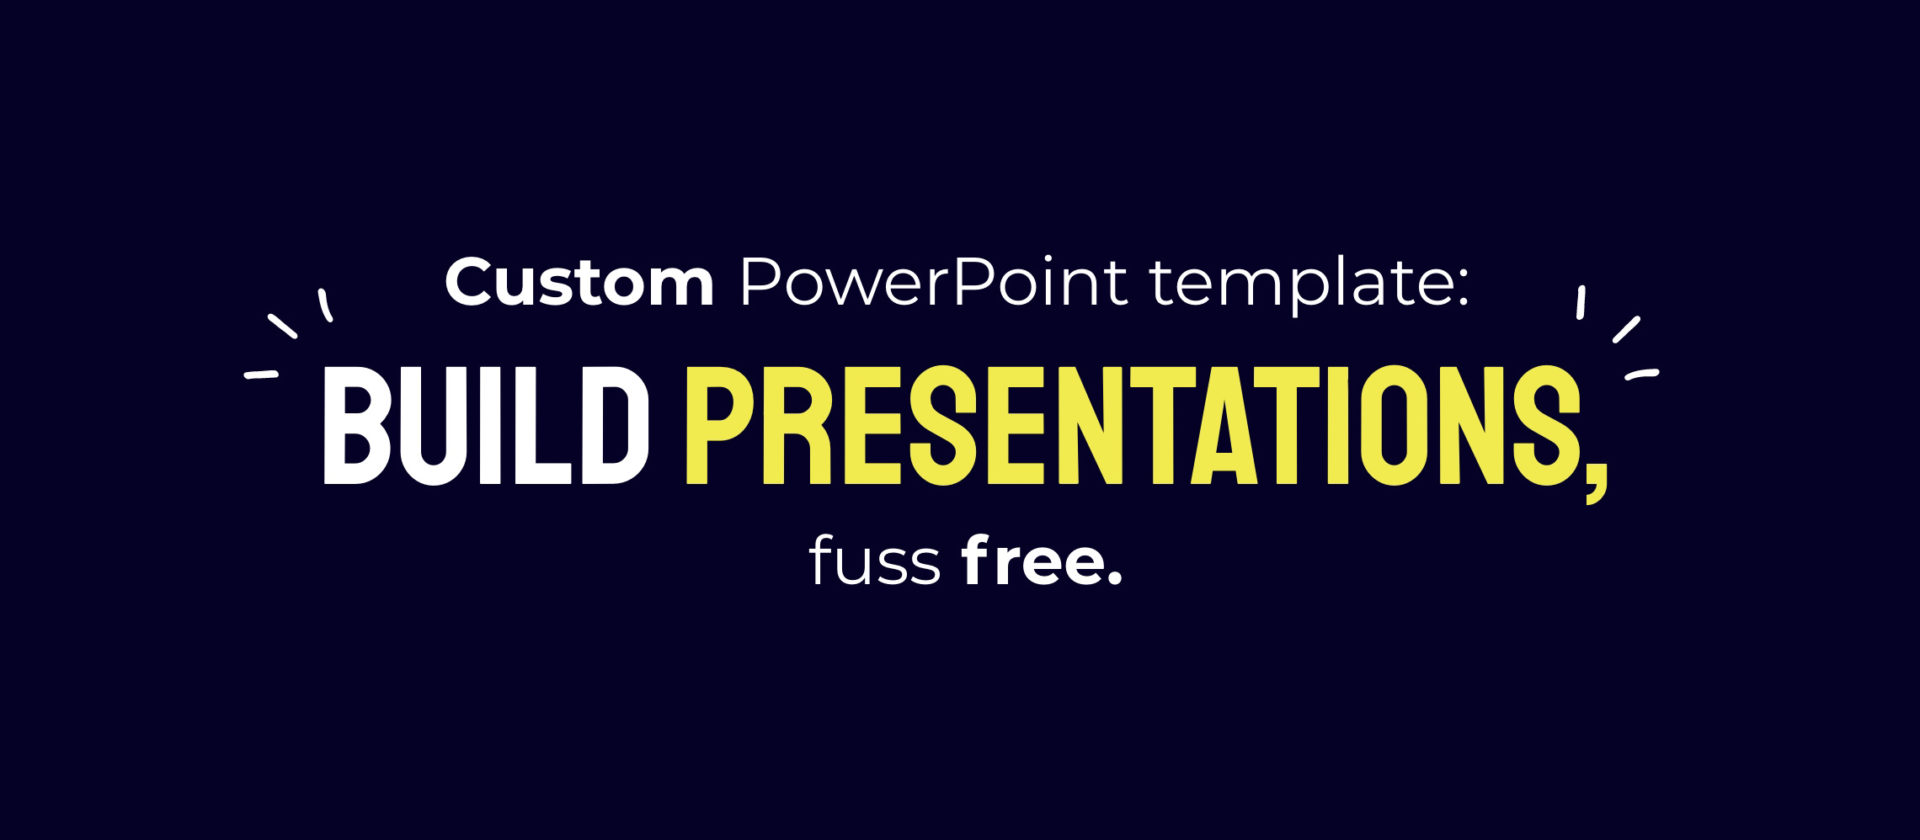 Custom PowerPoint template: build presentations, fuss-free.